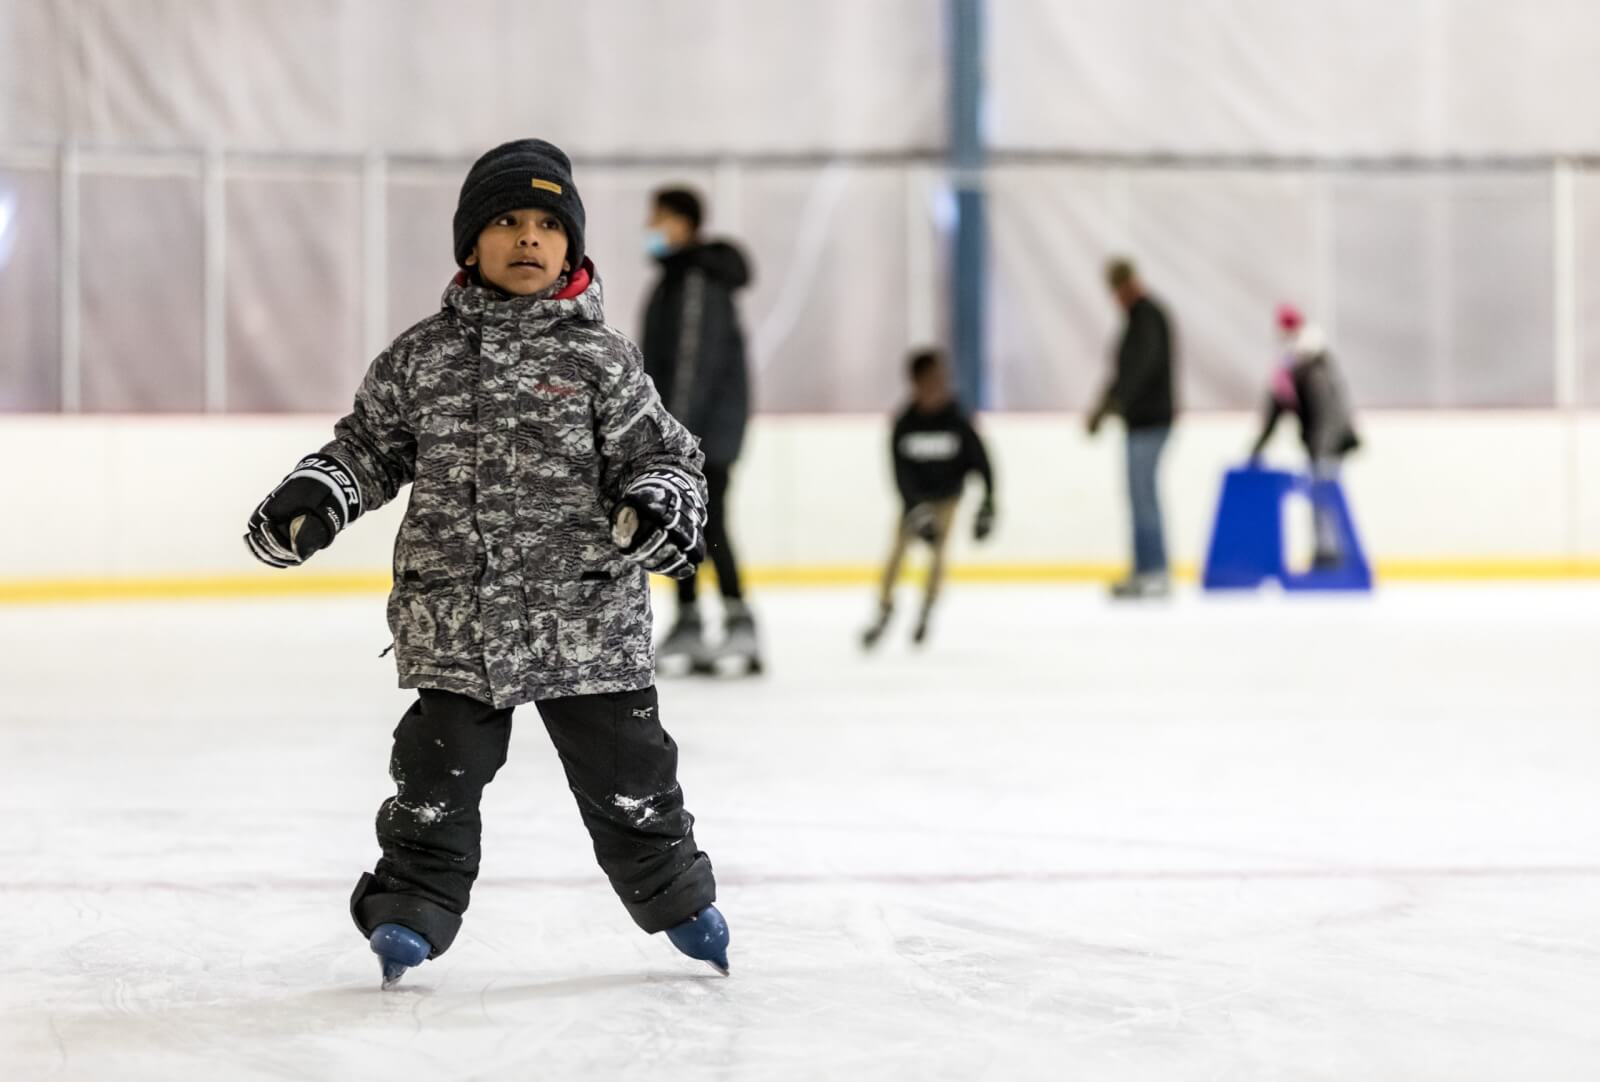 Ice skating at Edwards Ice Arena